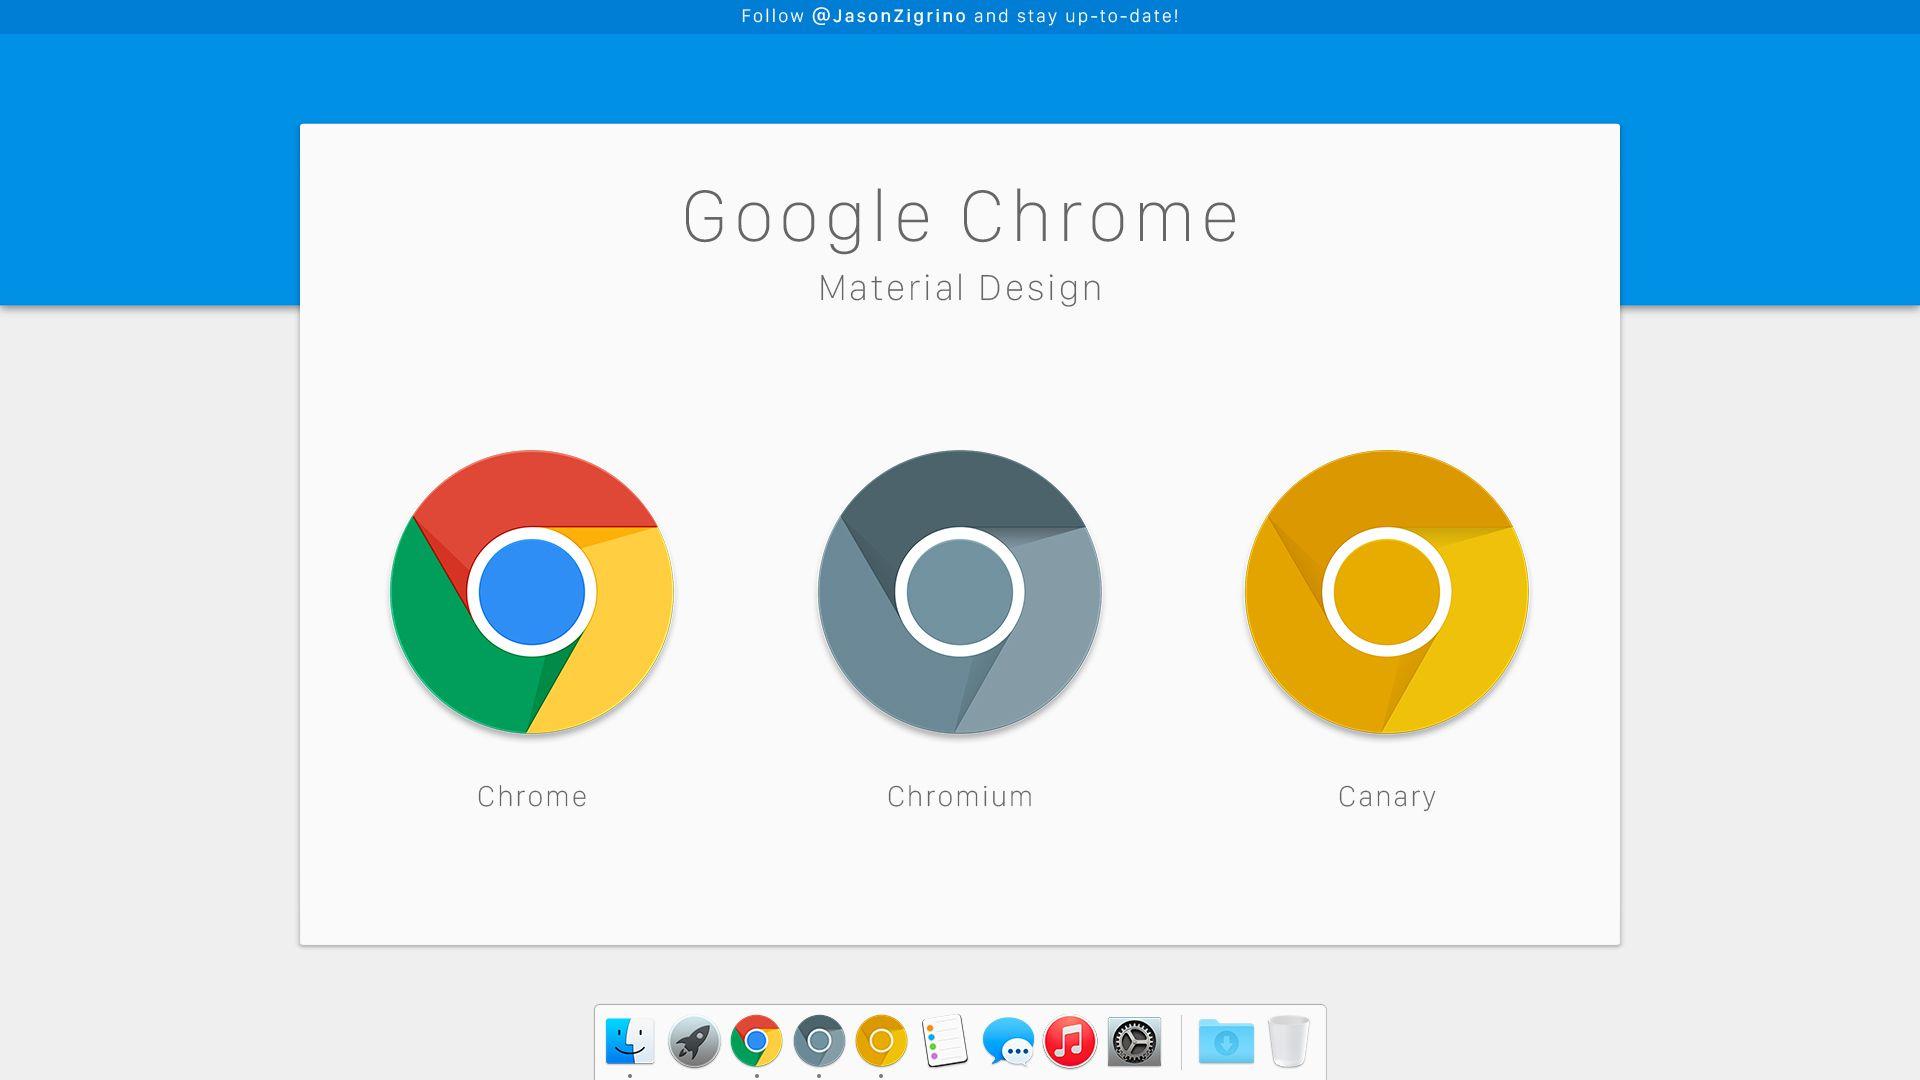 Chrome Mac Logo - Google Chrome Material Design by JasonZigrino on DeviantArt